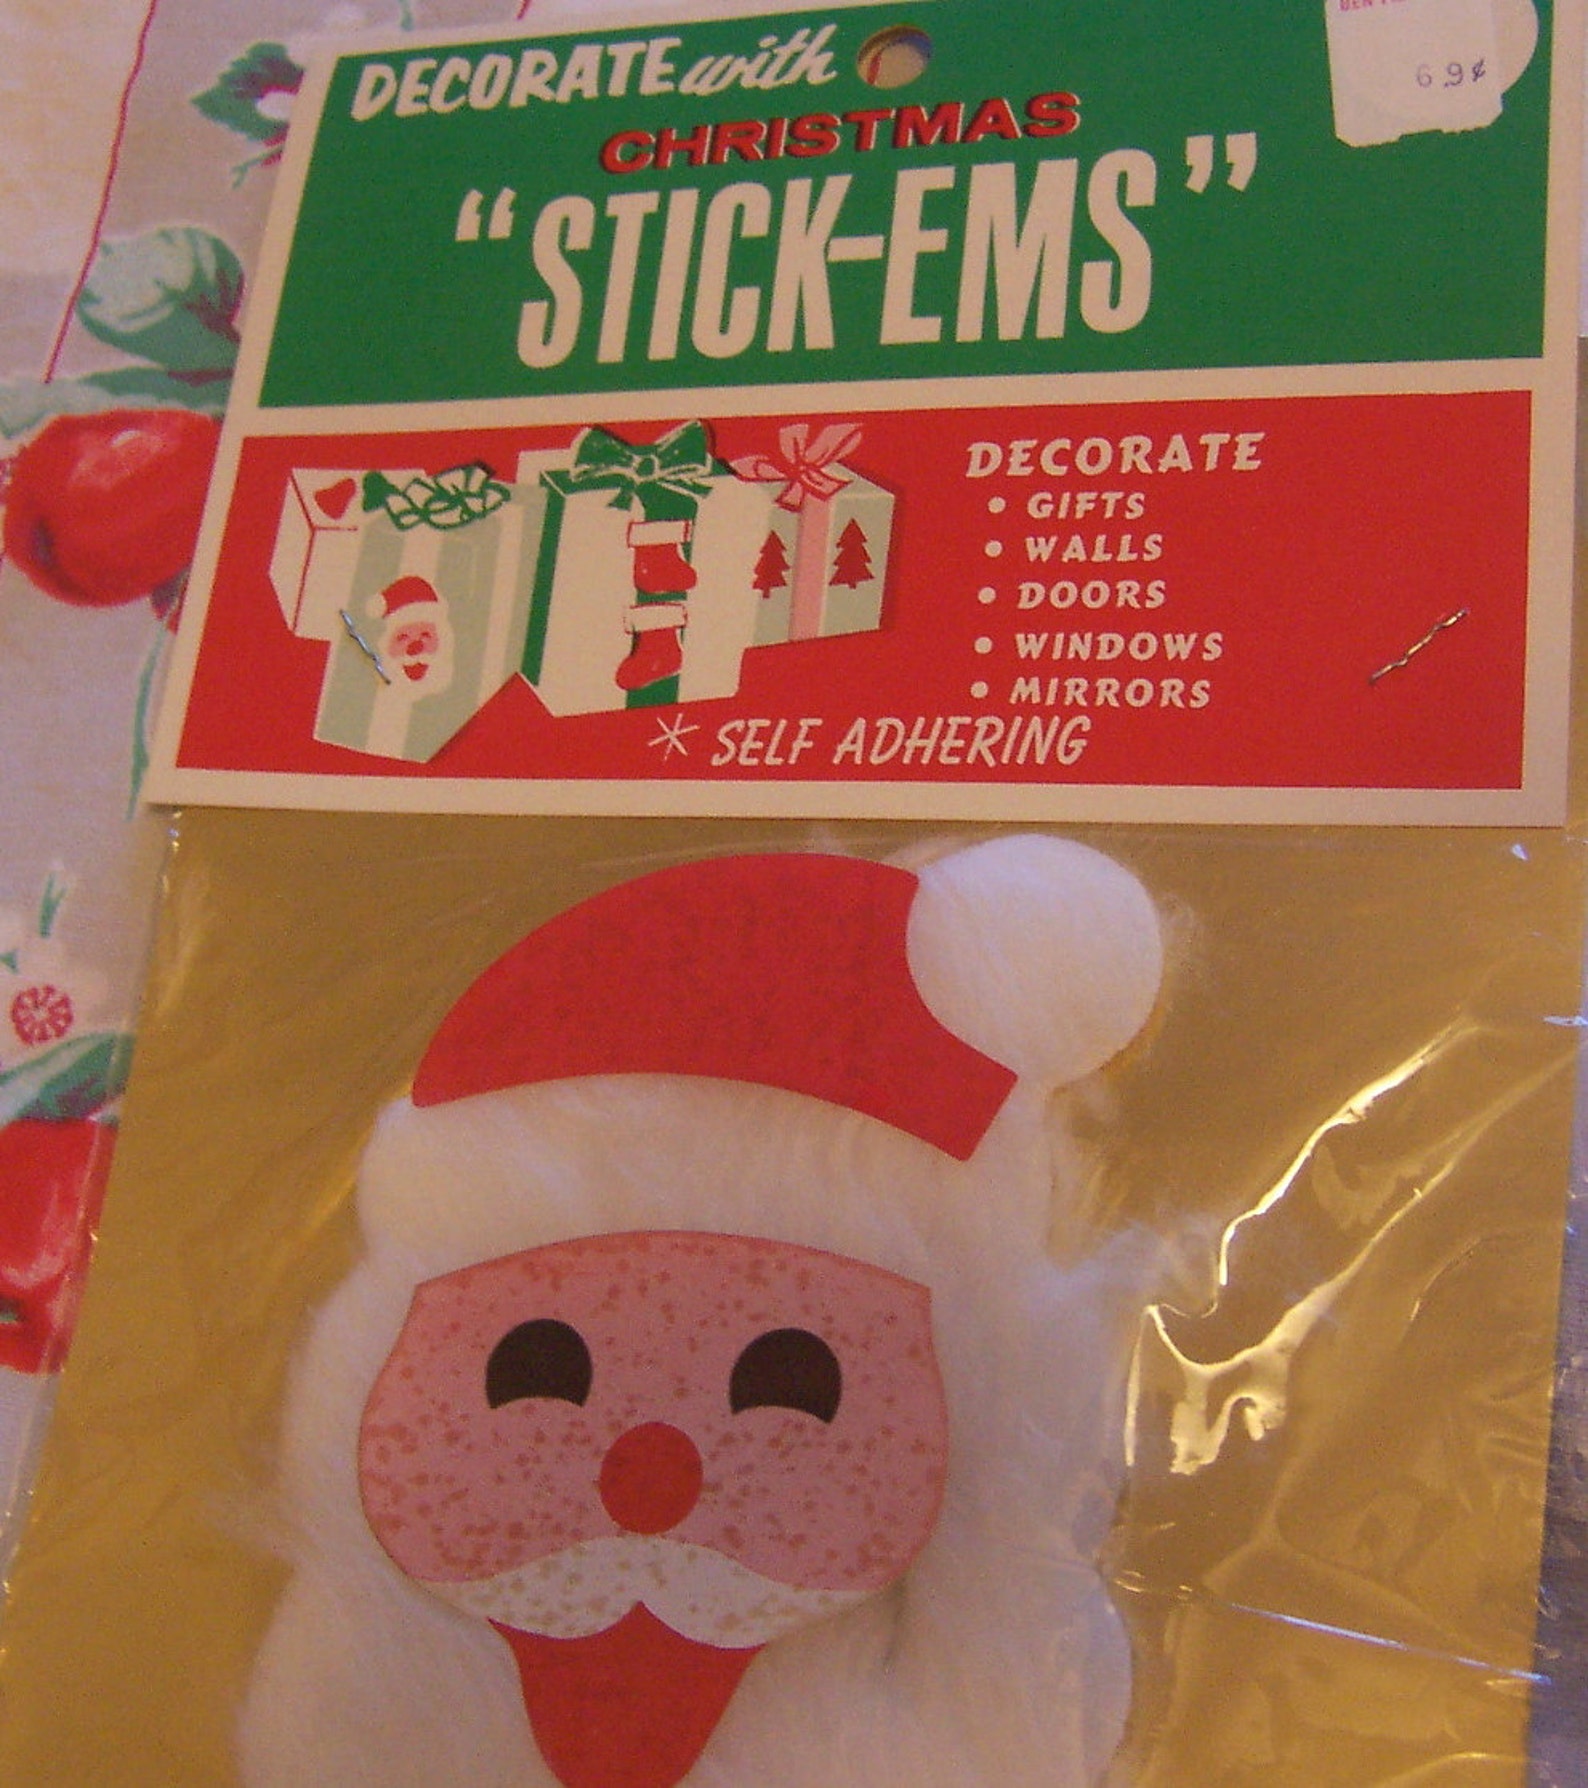 Stickers / Christmas Santa Stick Ems - Etsy